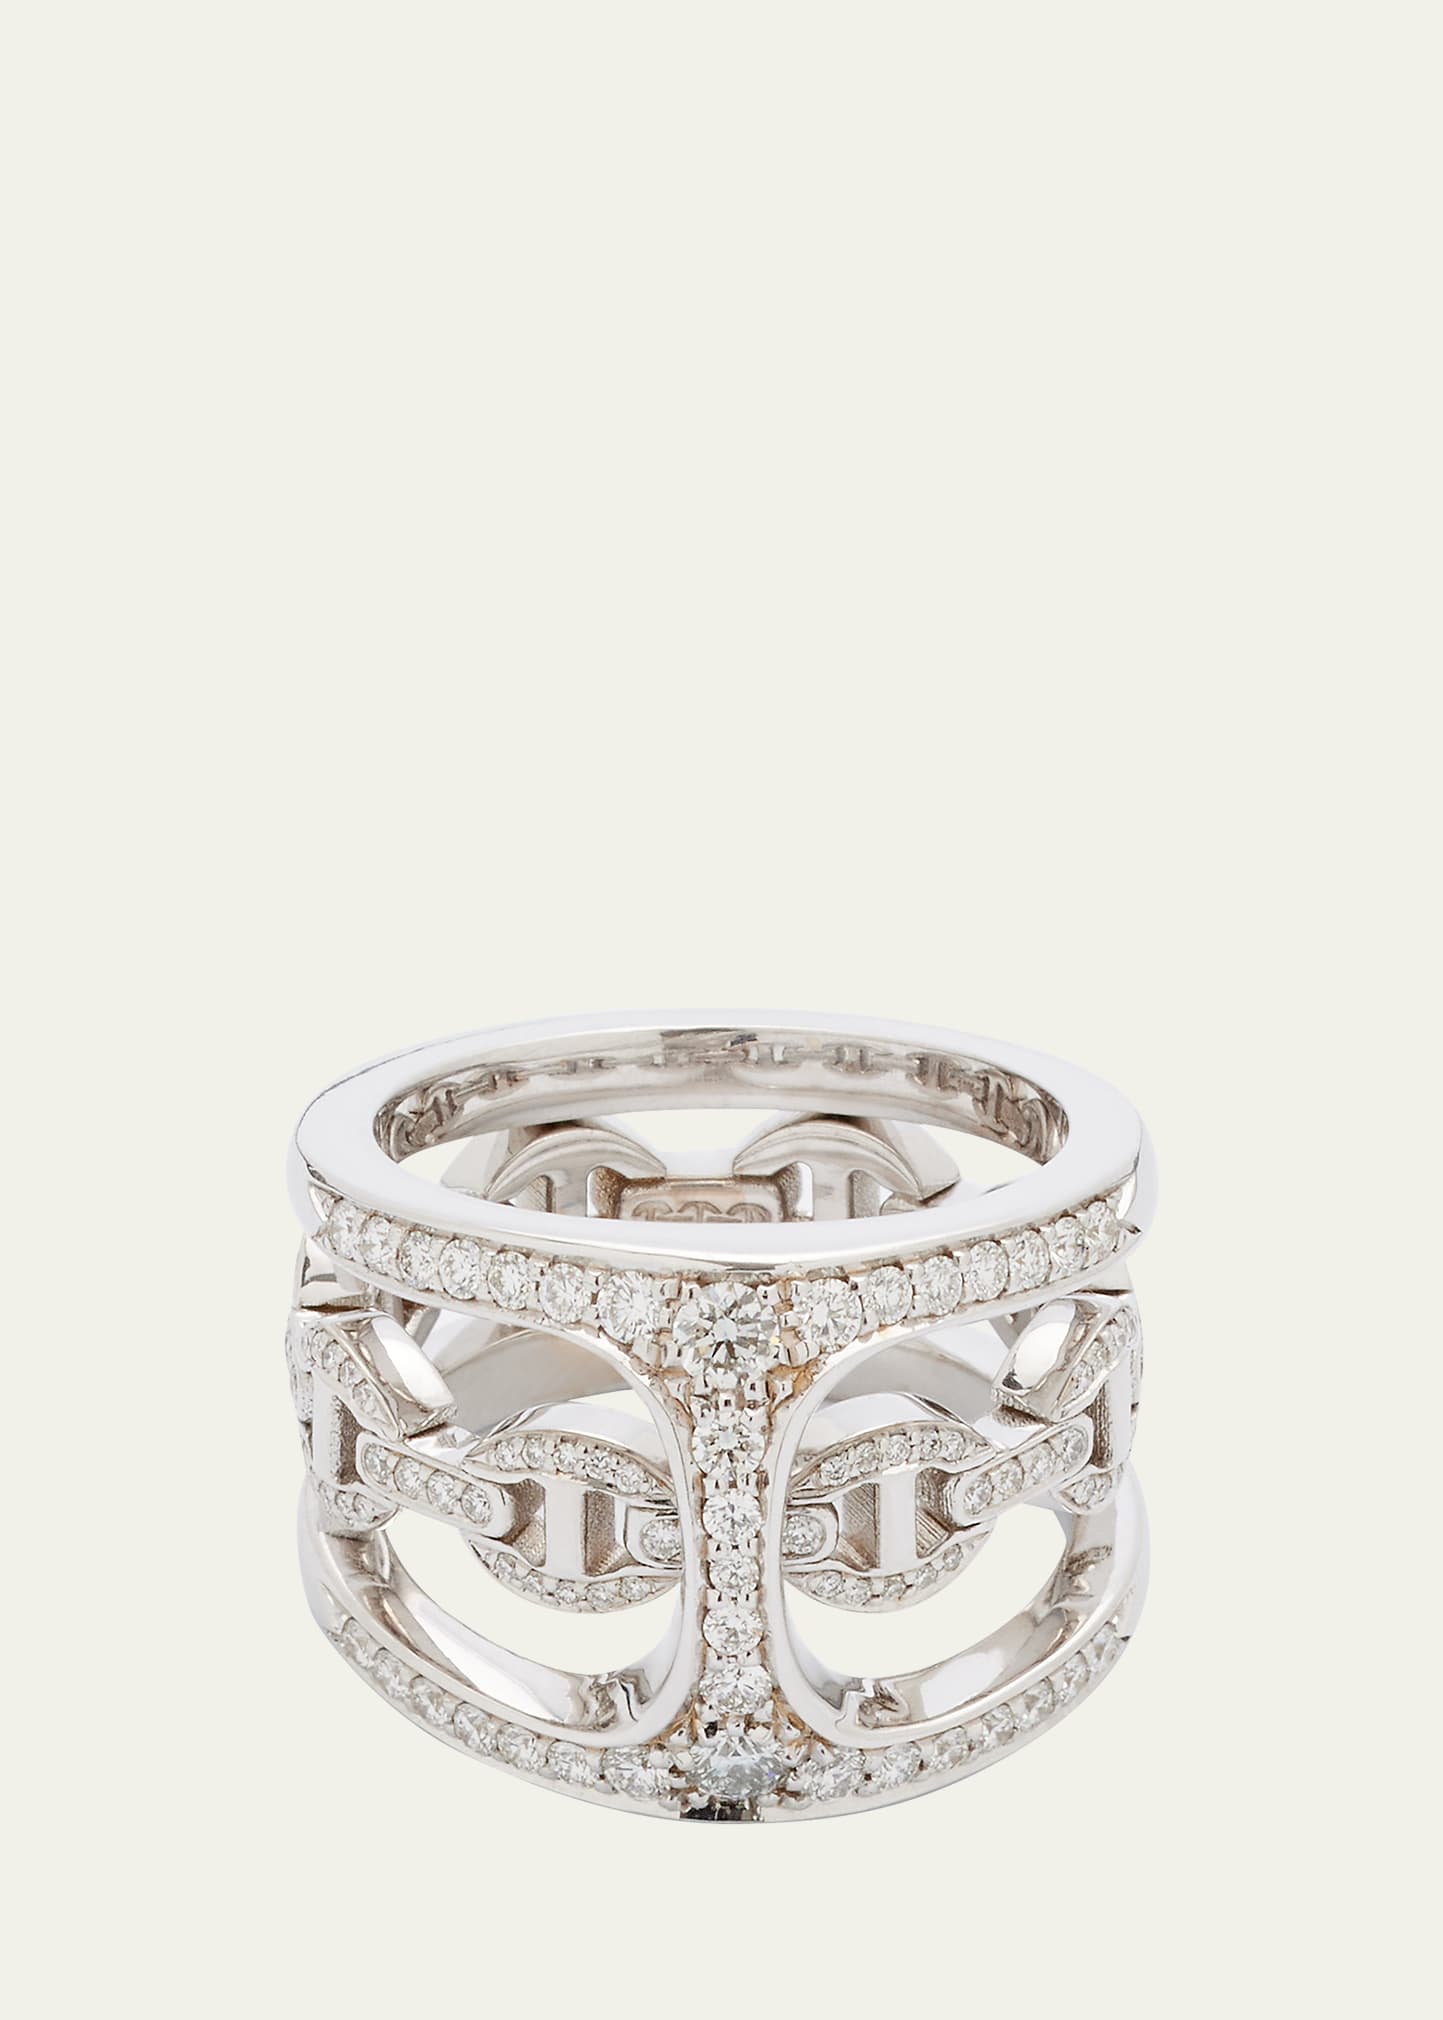 Hoorsenbuhs Dame Phantom Clique Antiquated Ring in 18K White Gold and Diamonds